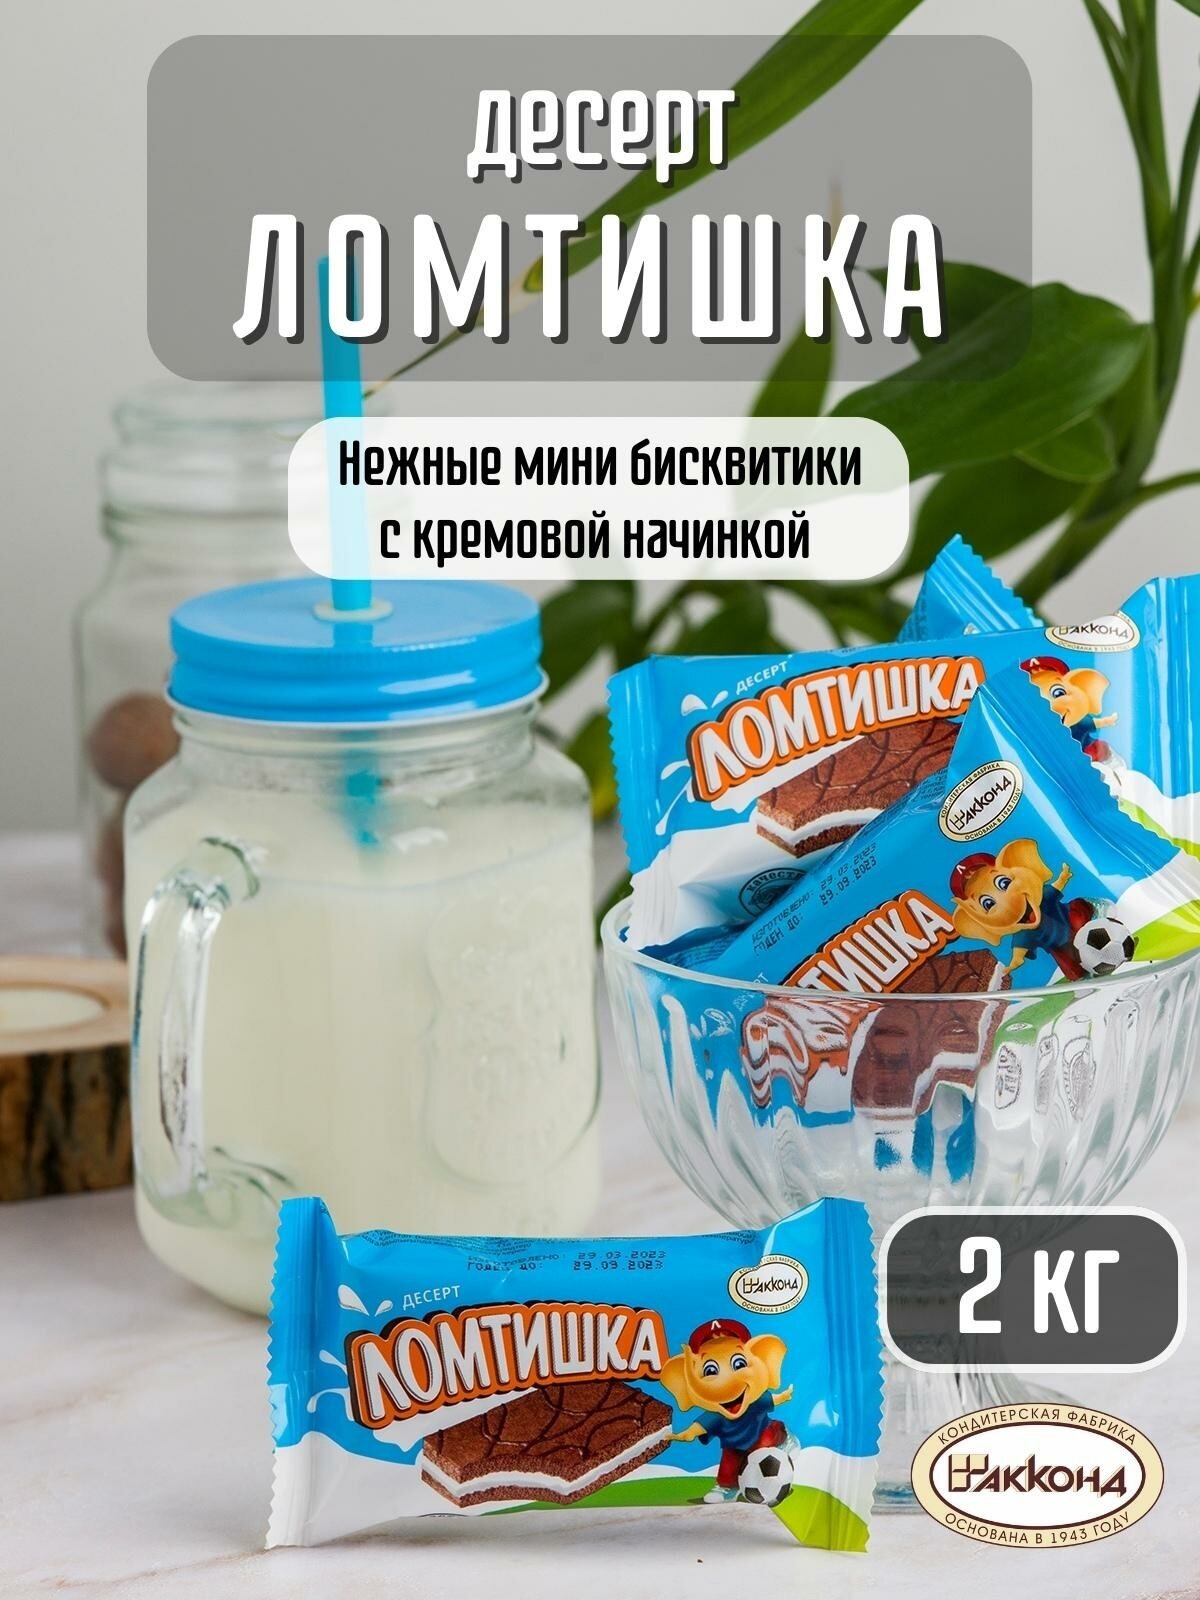 Десерт "Ломтишка" 2000 гр. акконд